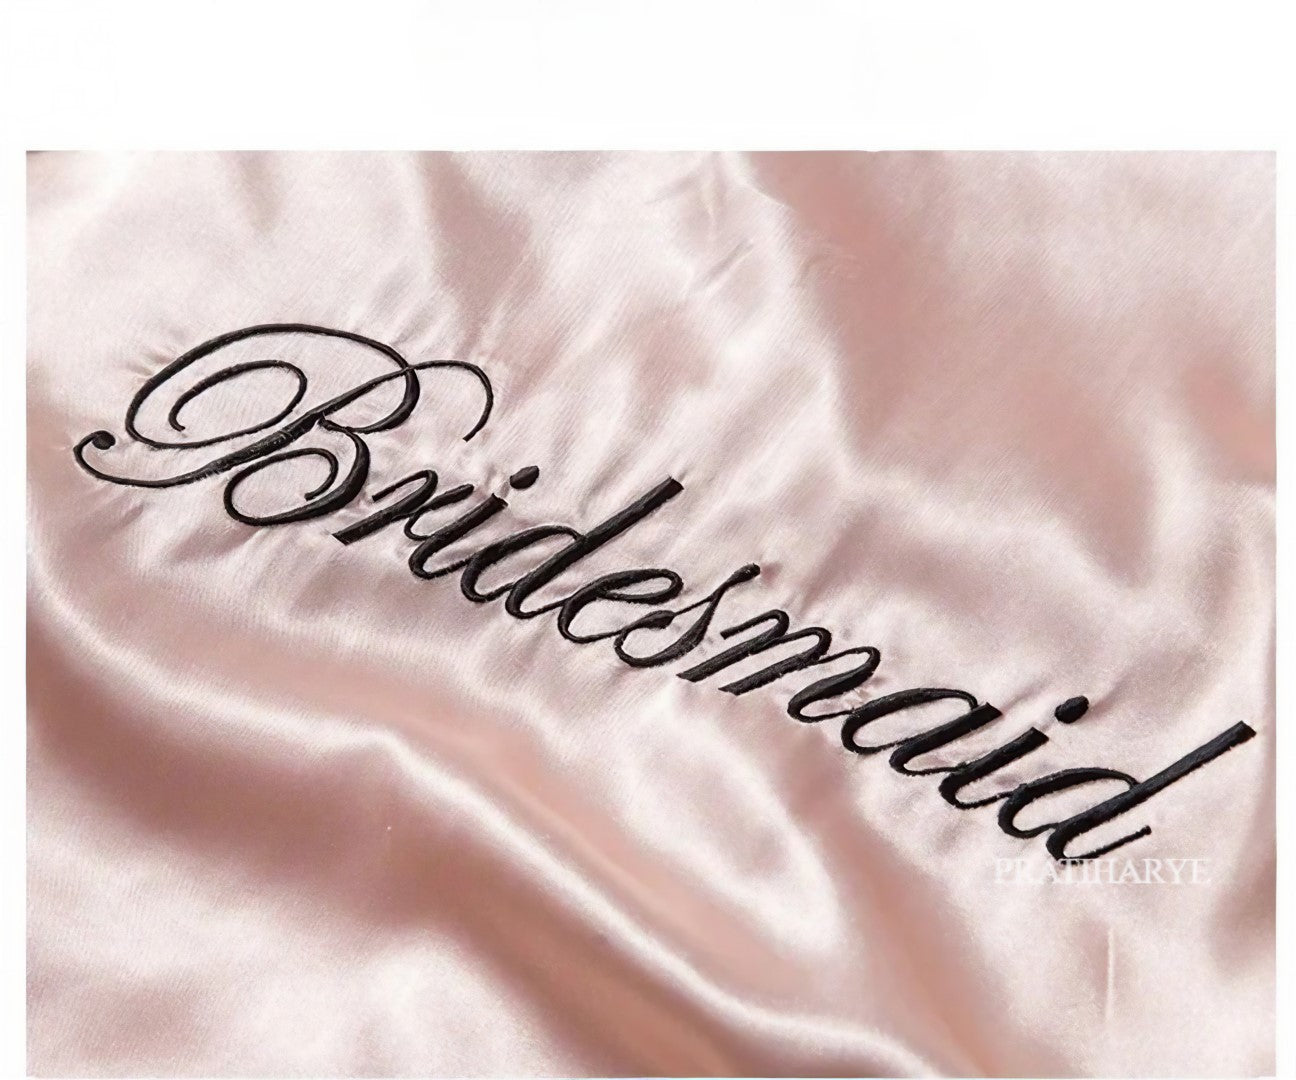 Embroidery Bride & Bridesmaids Silk & Satin Robe